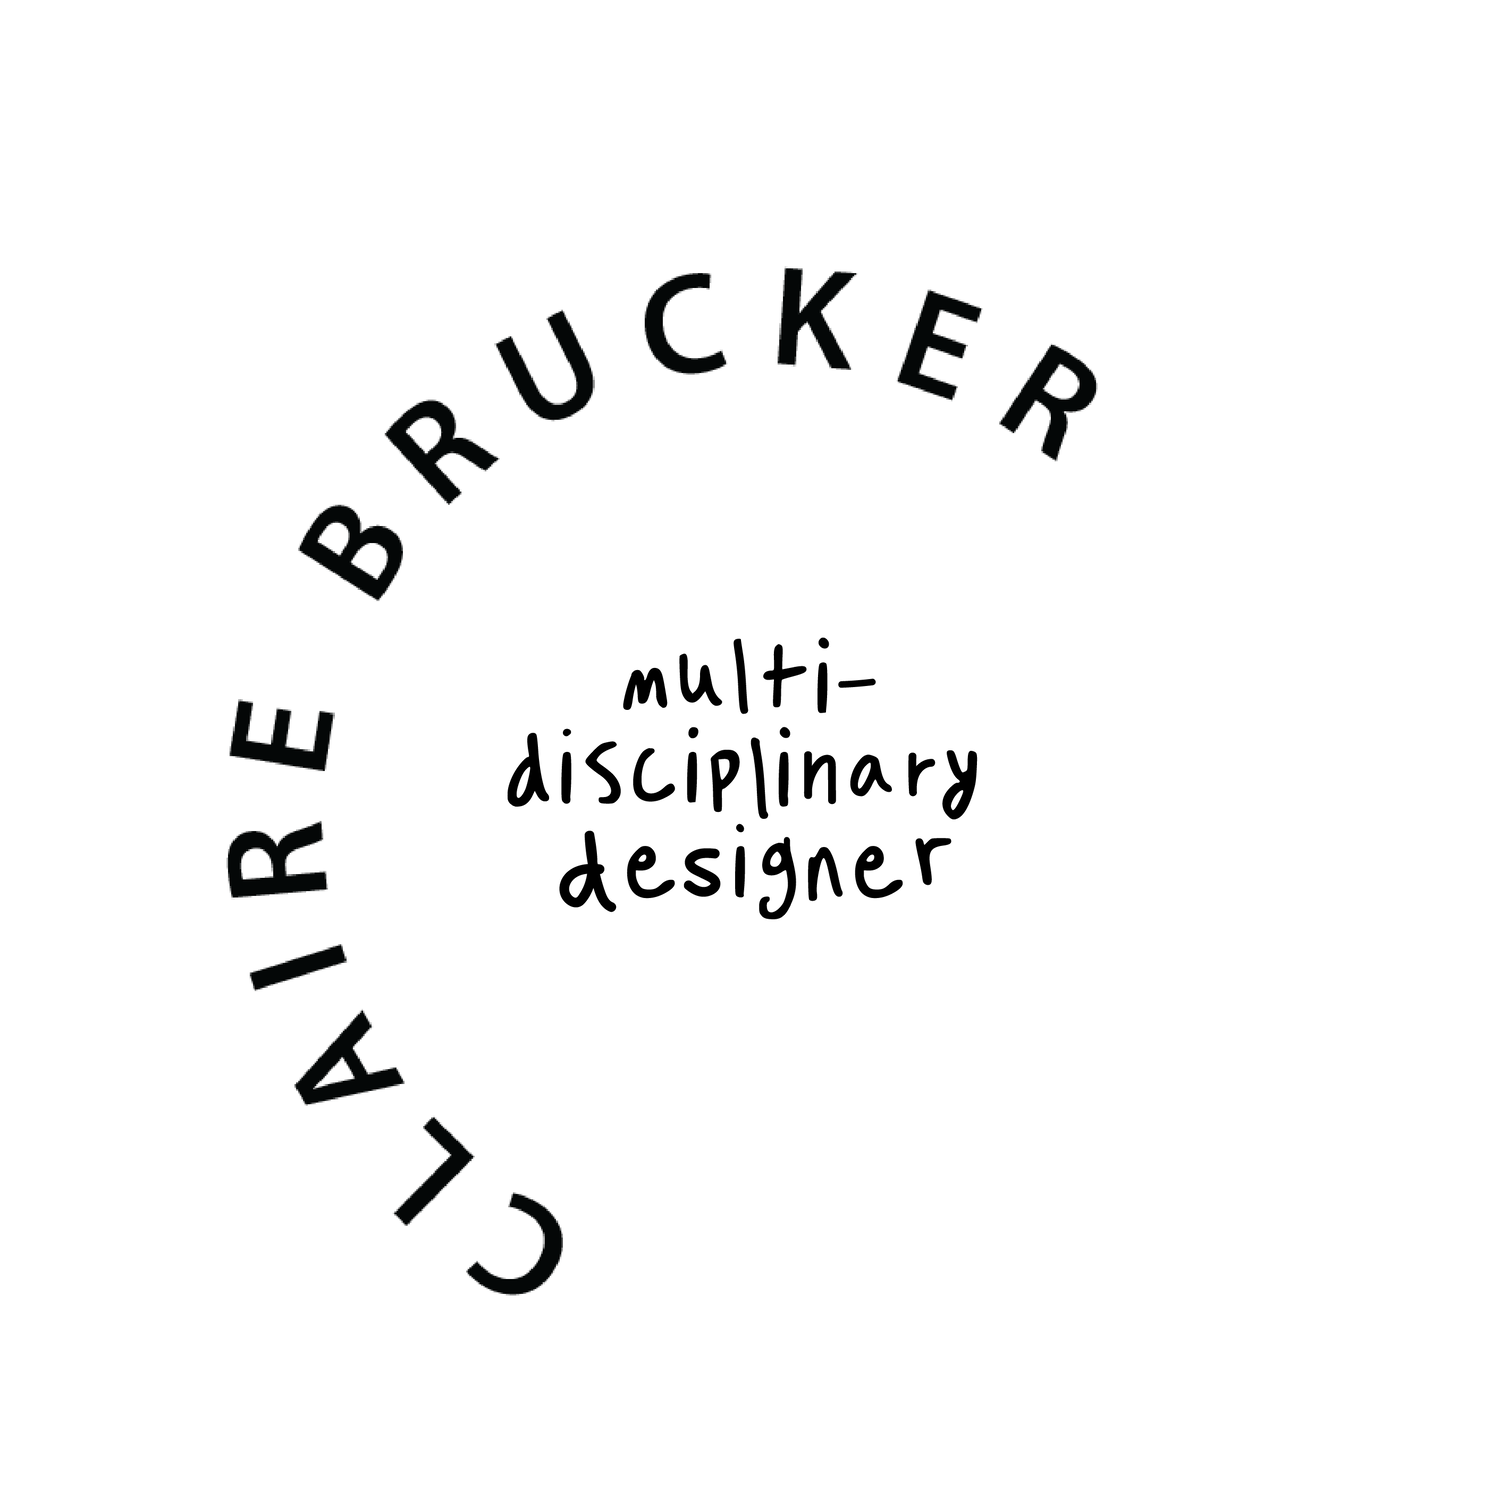 Claire Brucker Design